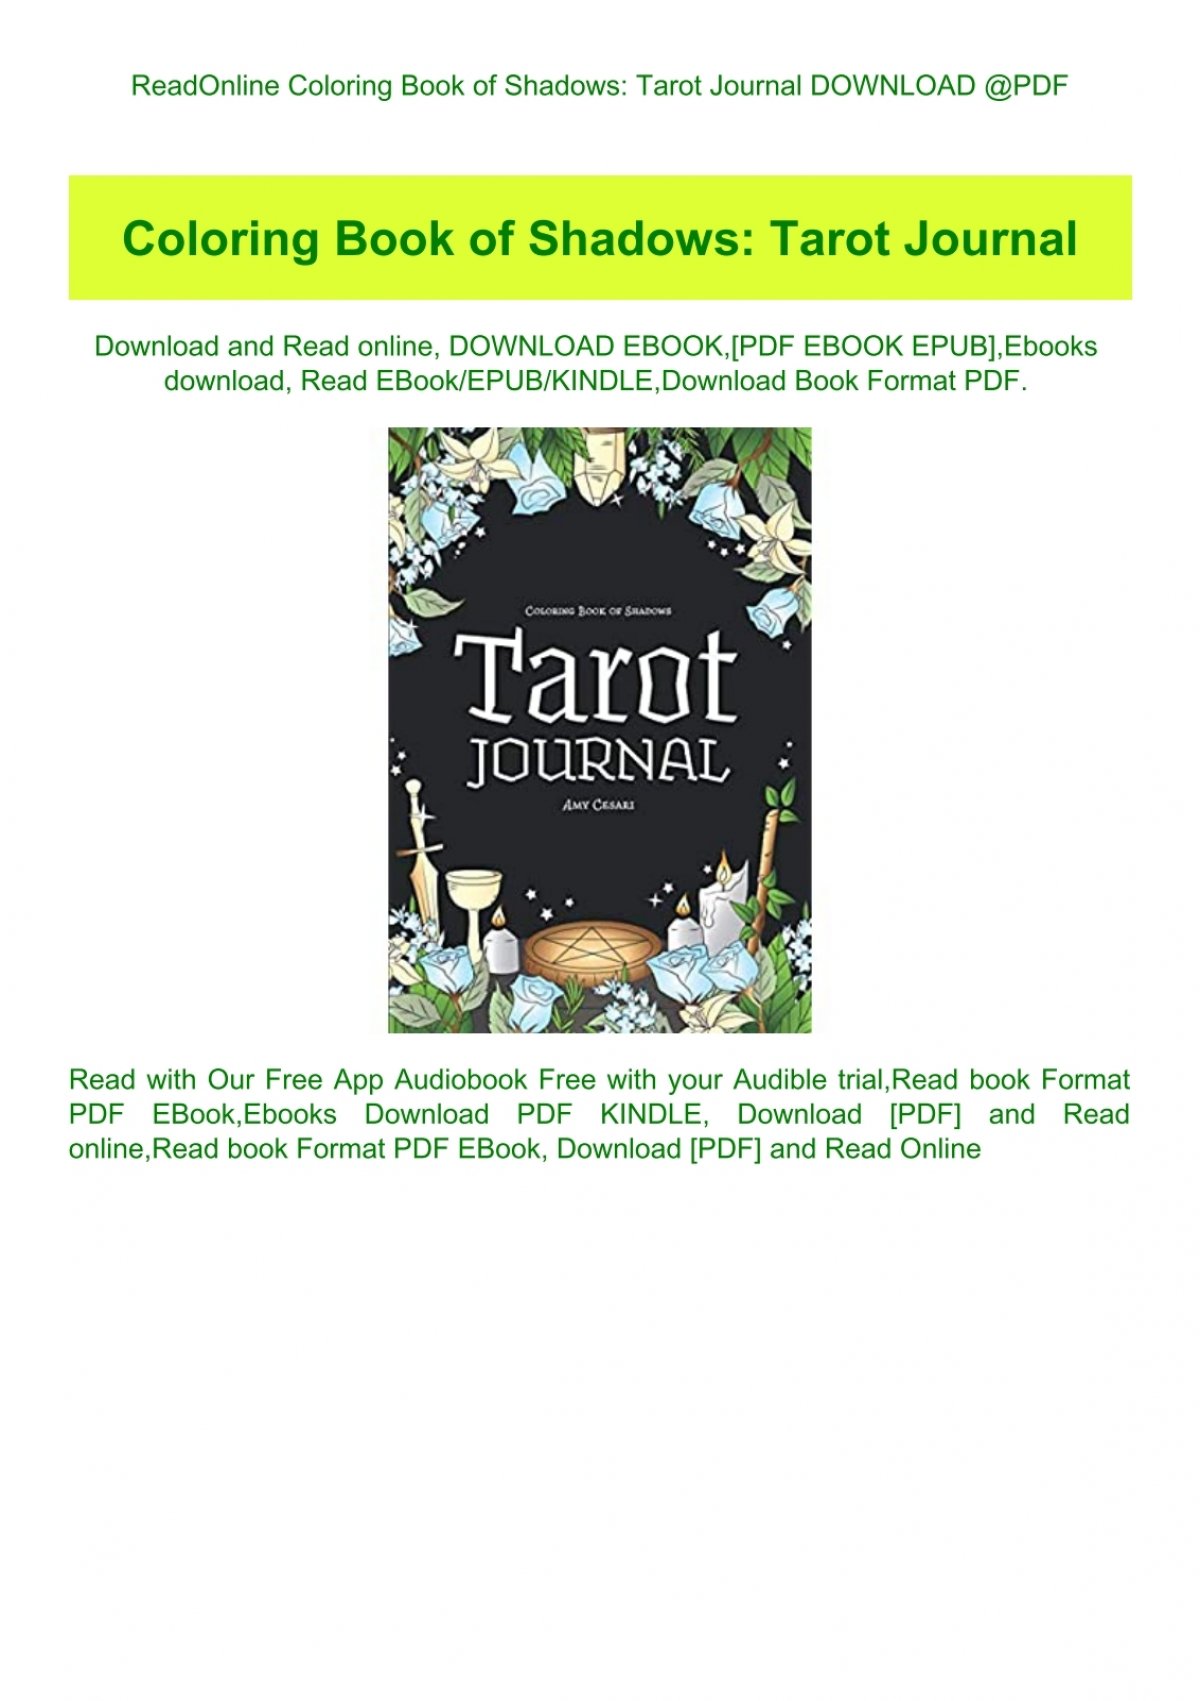 Download Readonline Coloring Book Of Shadows Tarot Journal Download Pdf